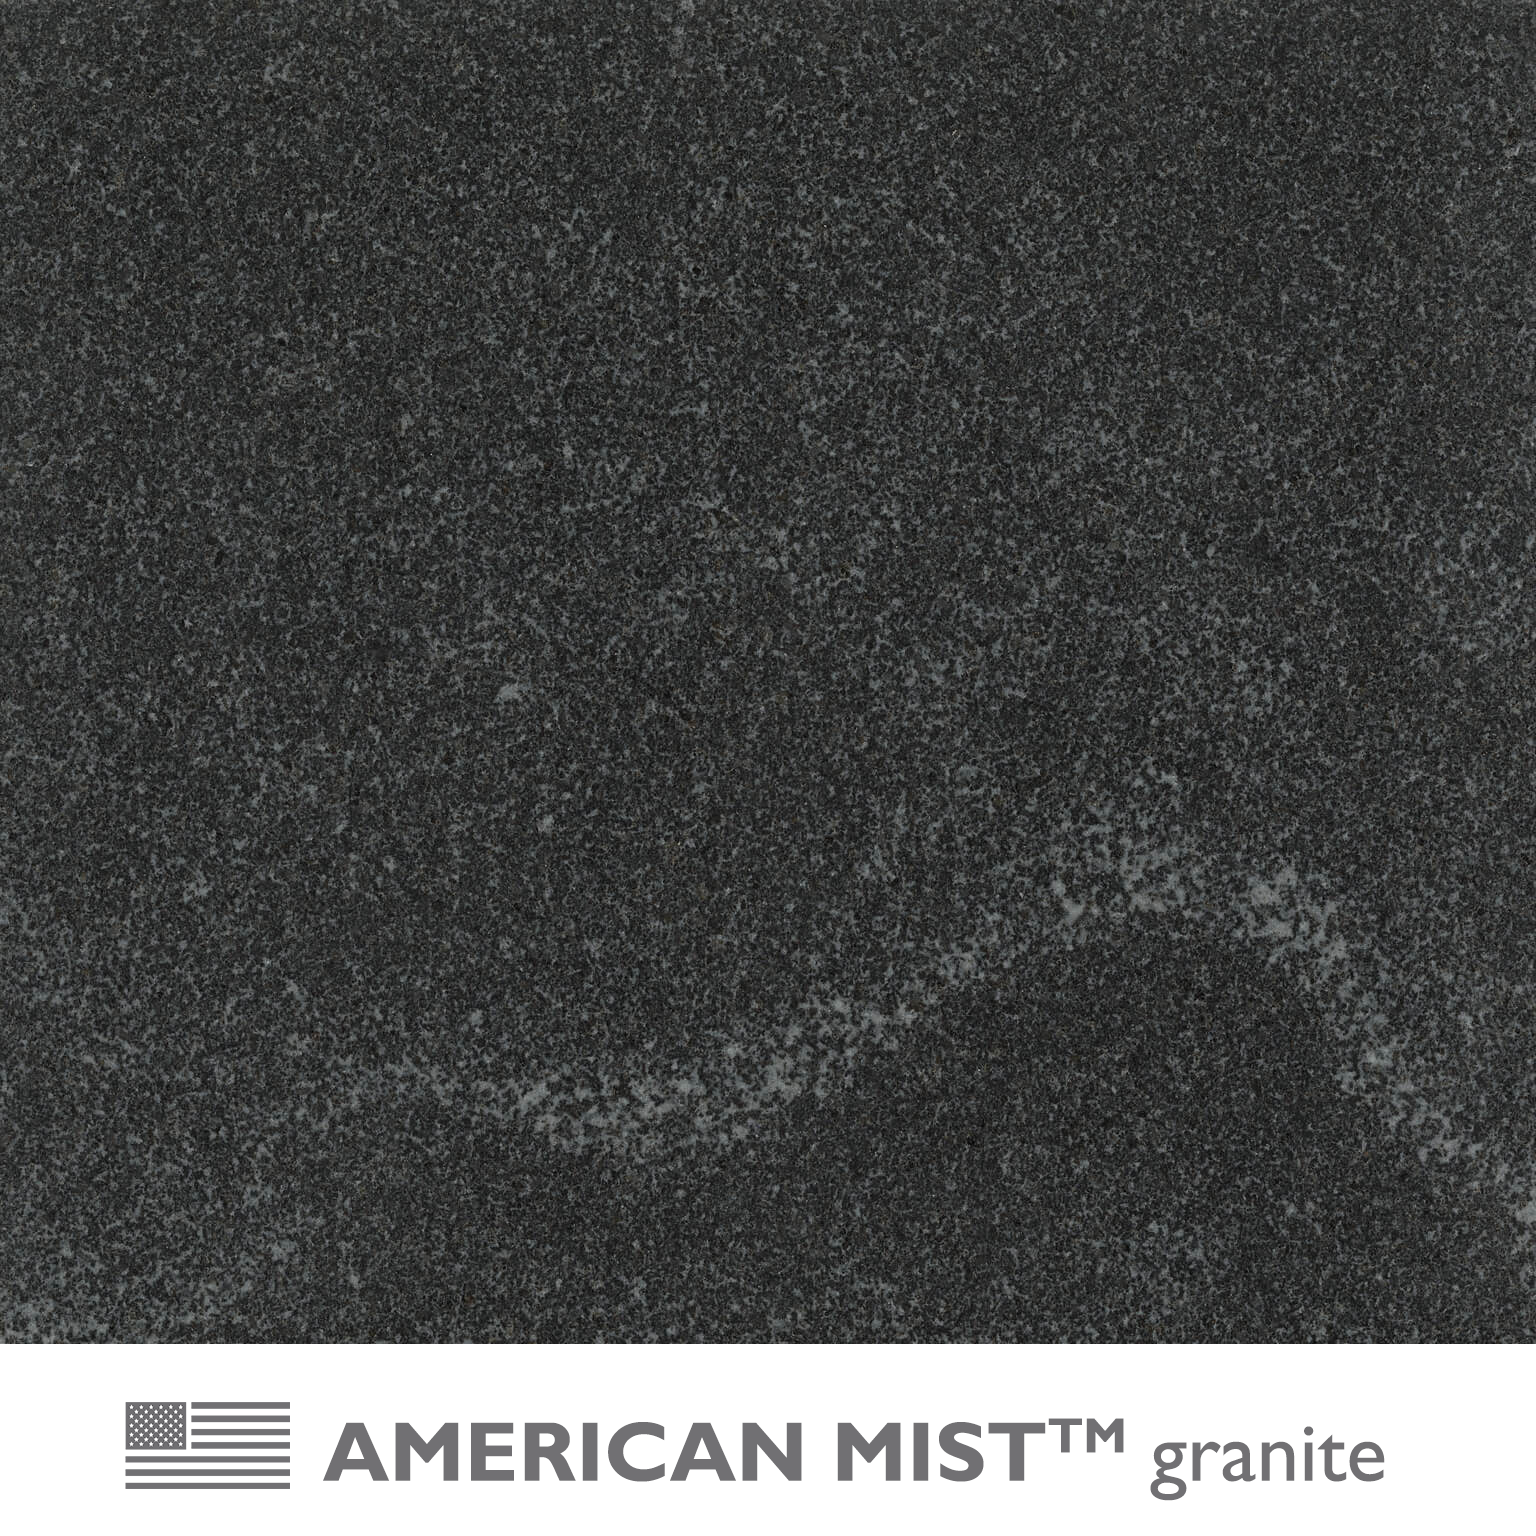 AMERICAN MIST™ granite